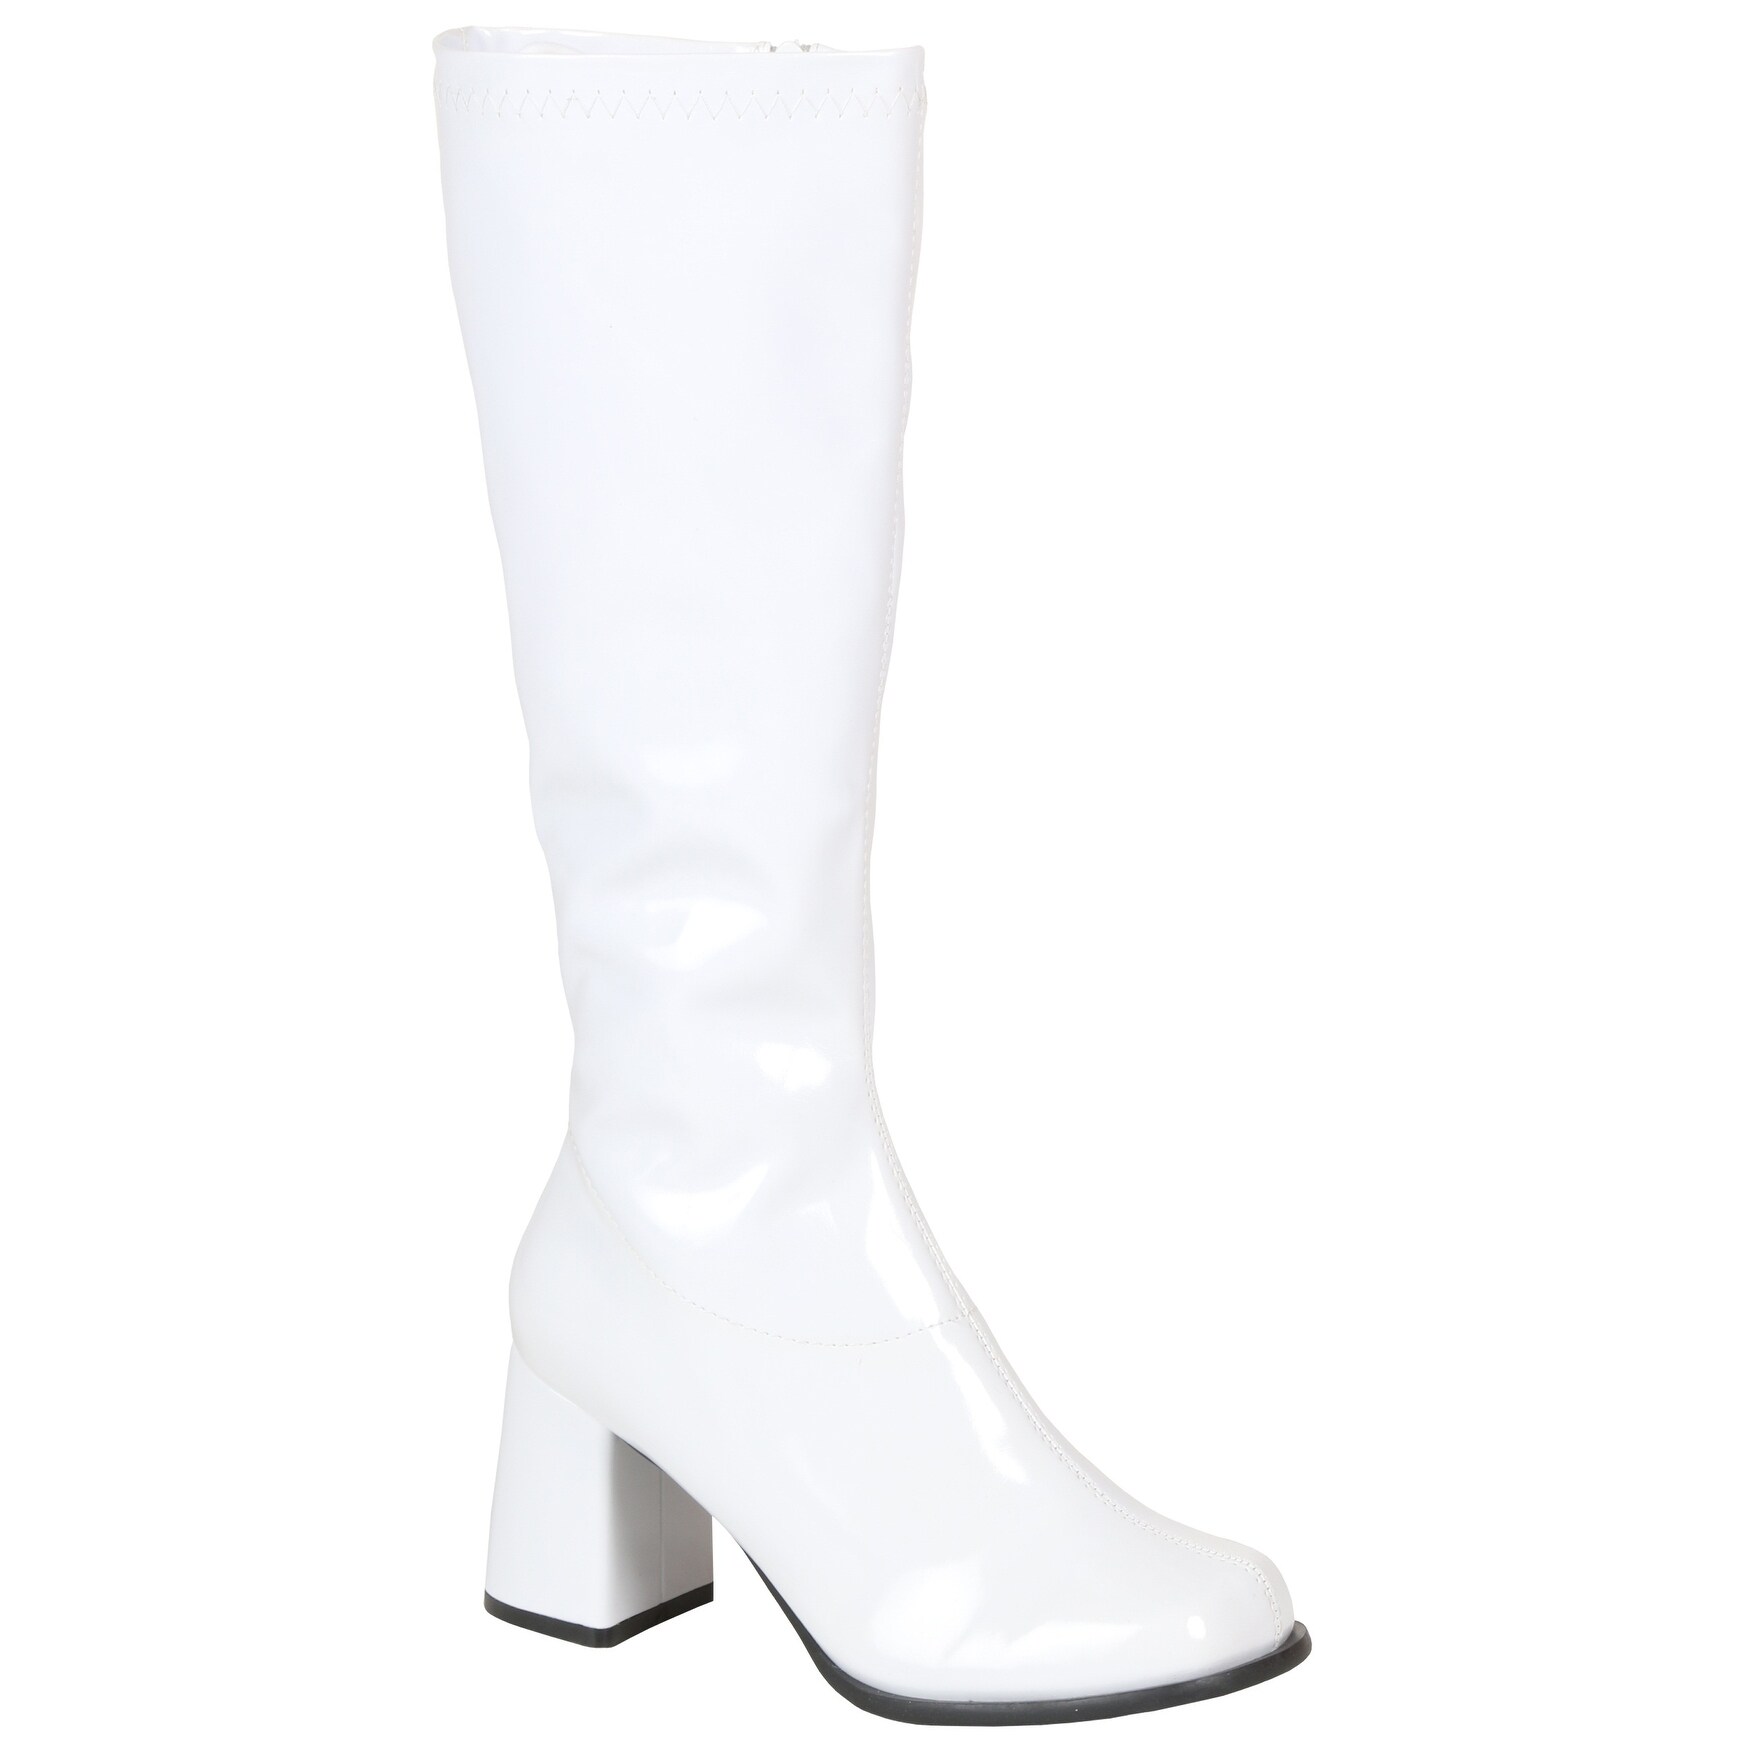 Shop Girls White Gogo Boots - Overstock 